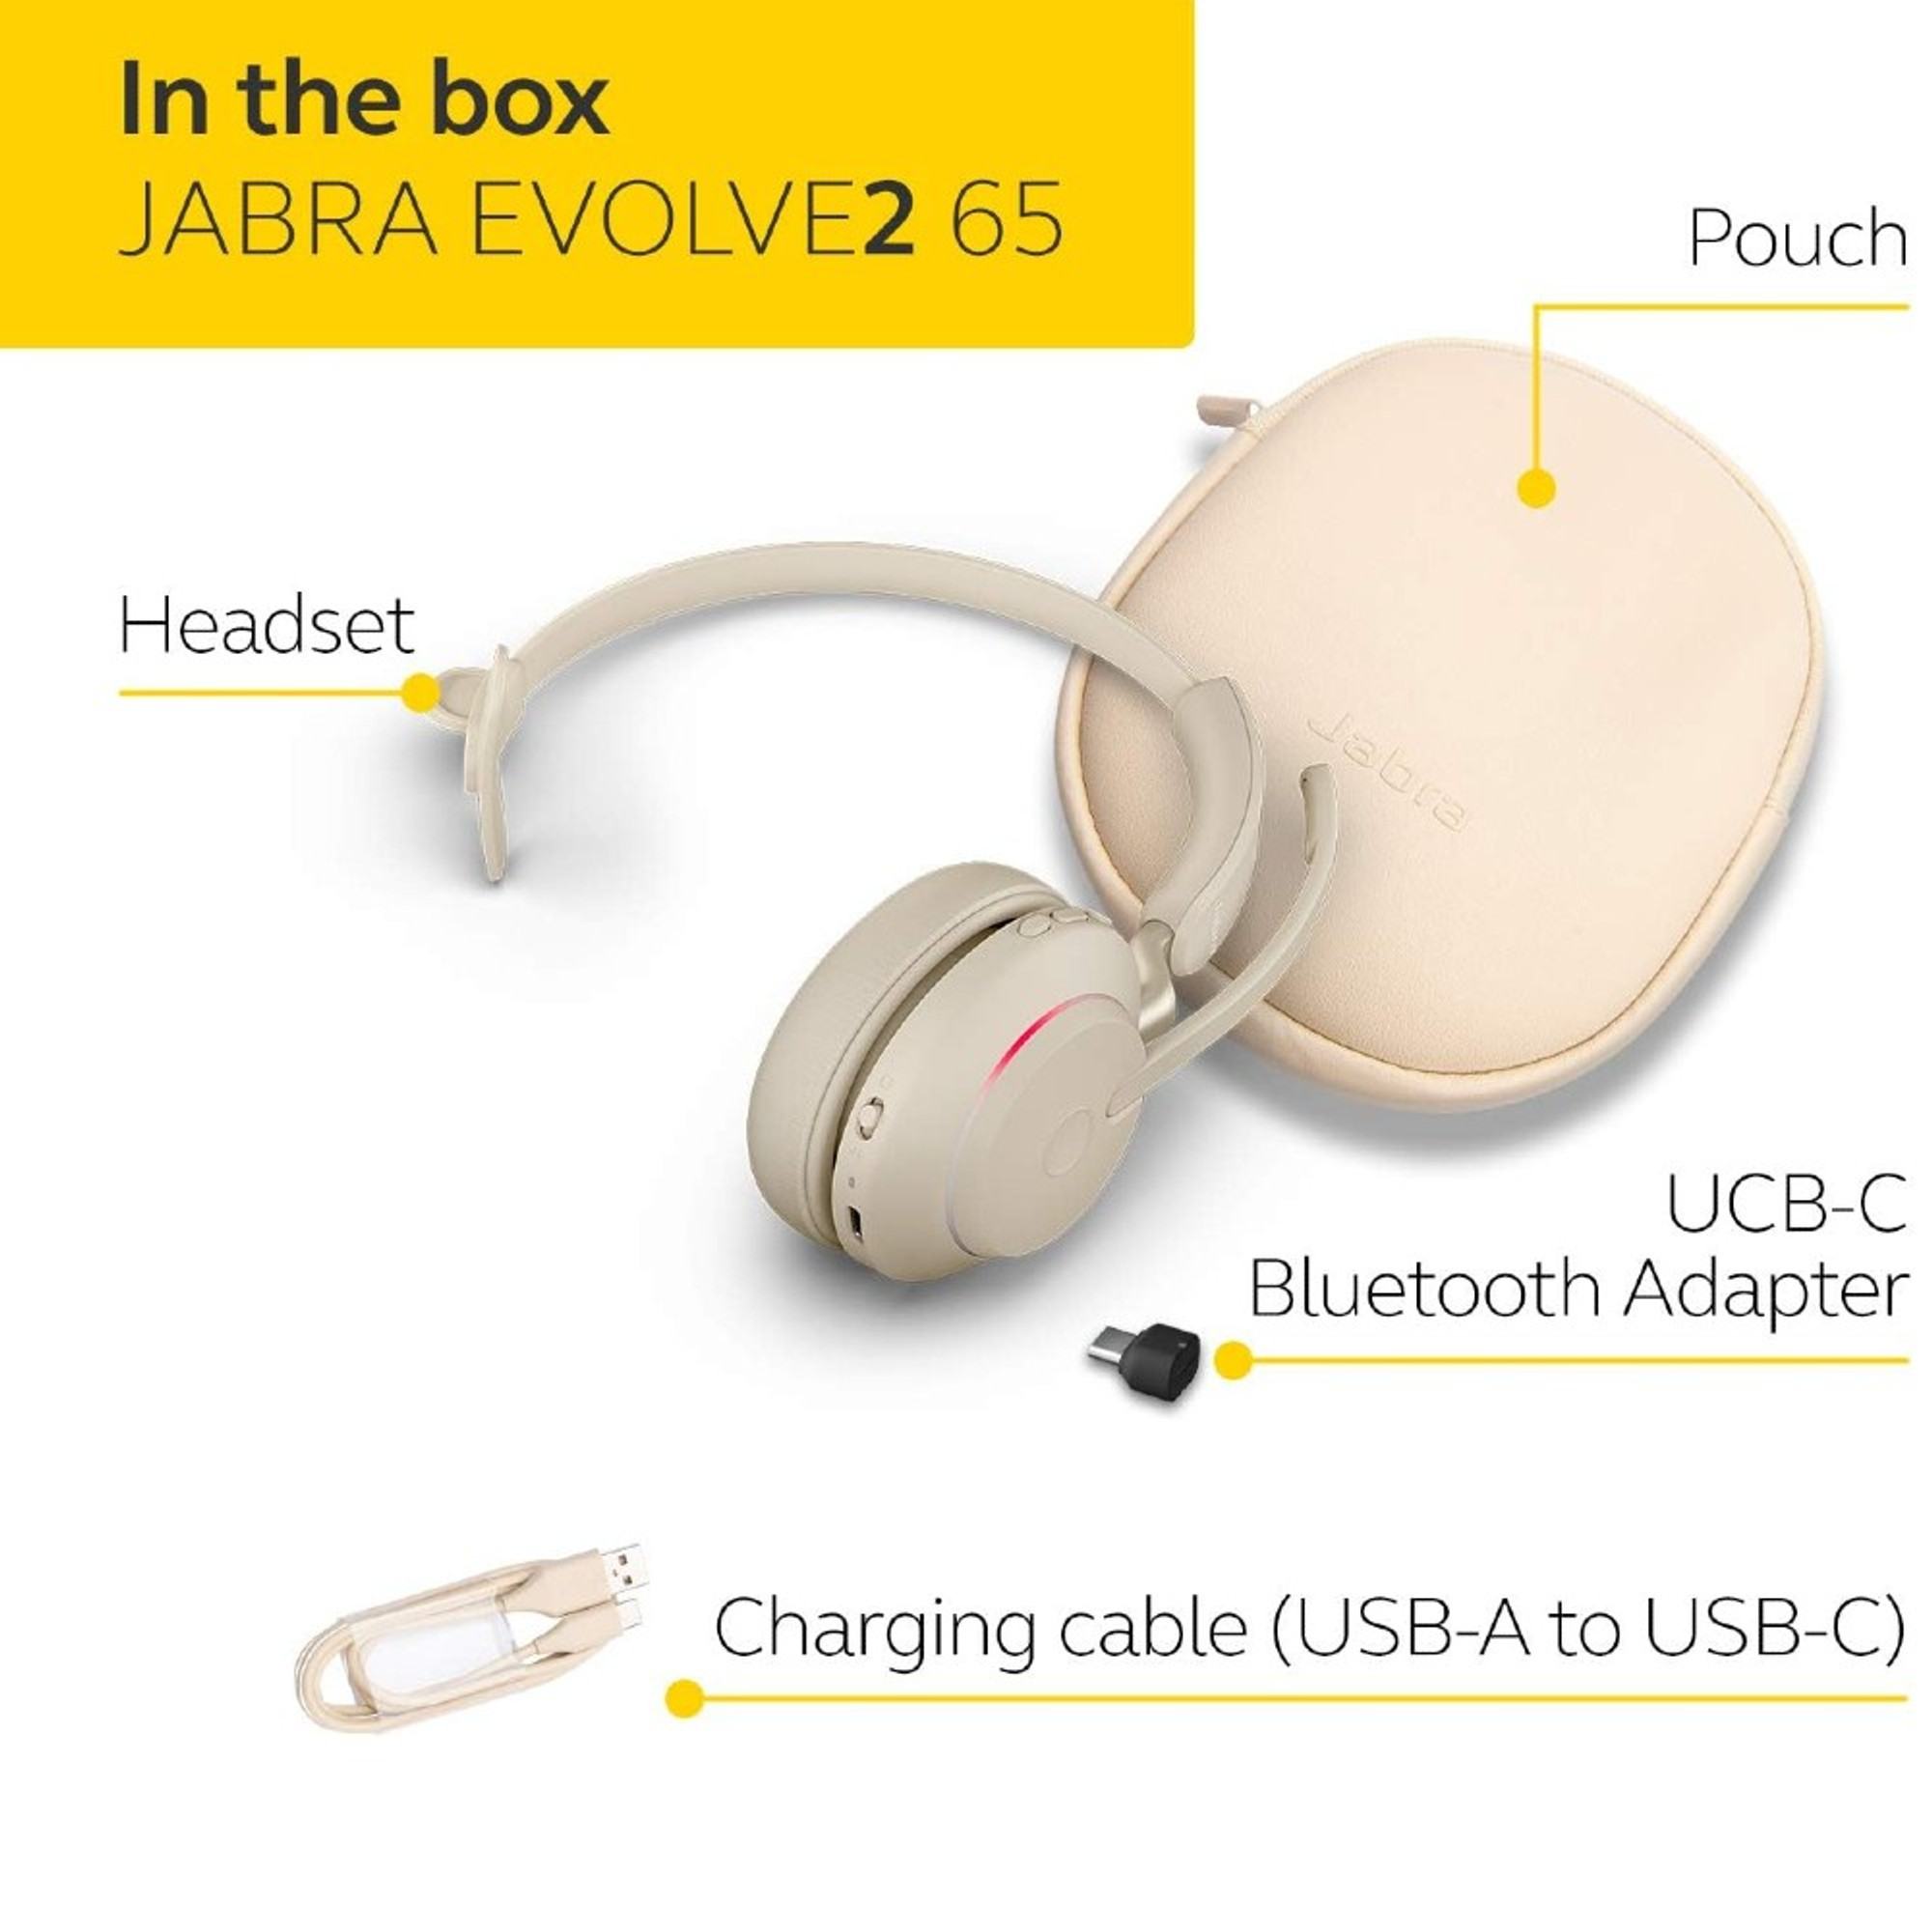 Jabra Link 380 Bluetooth Adapter - Headsets Direct